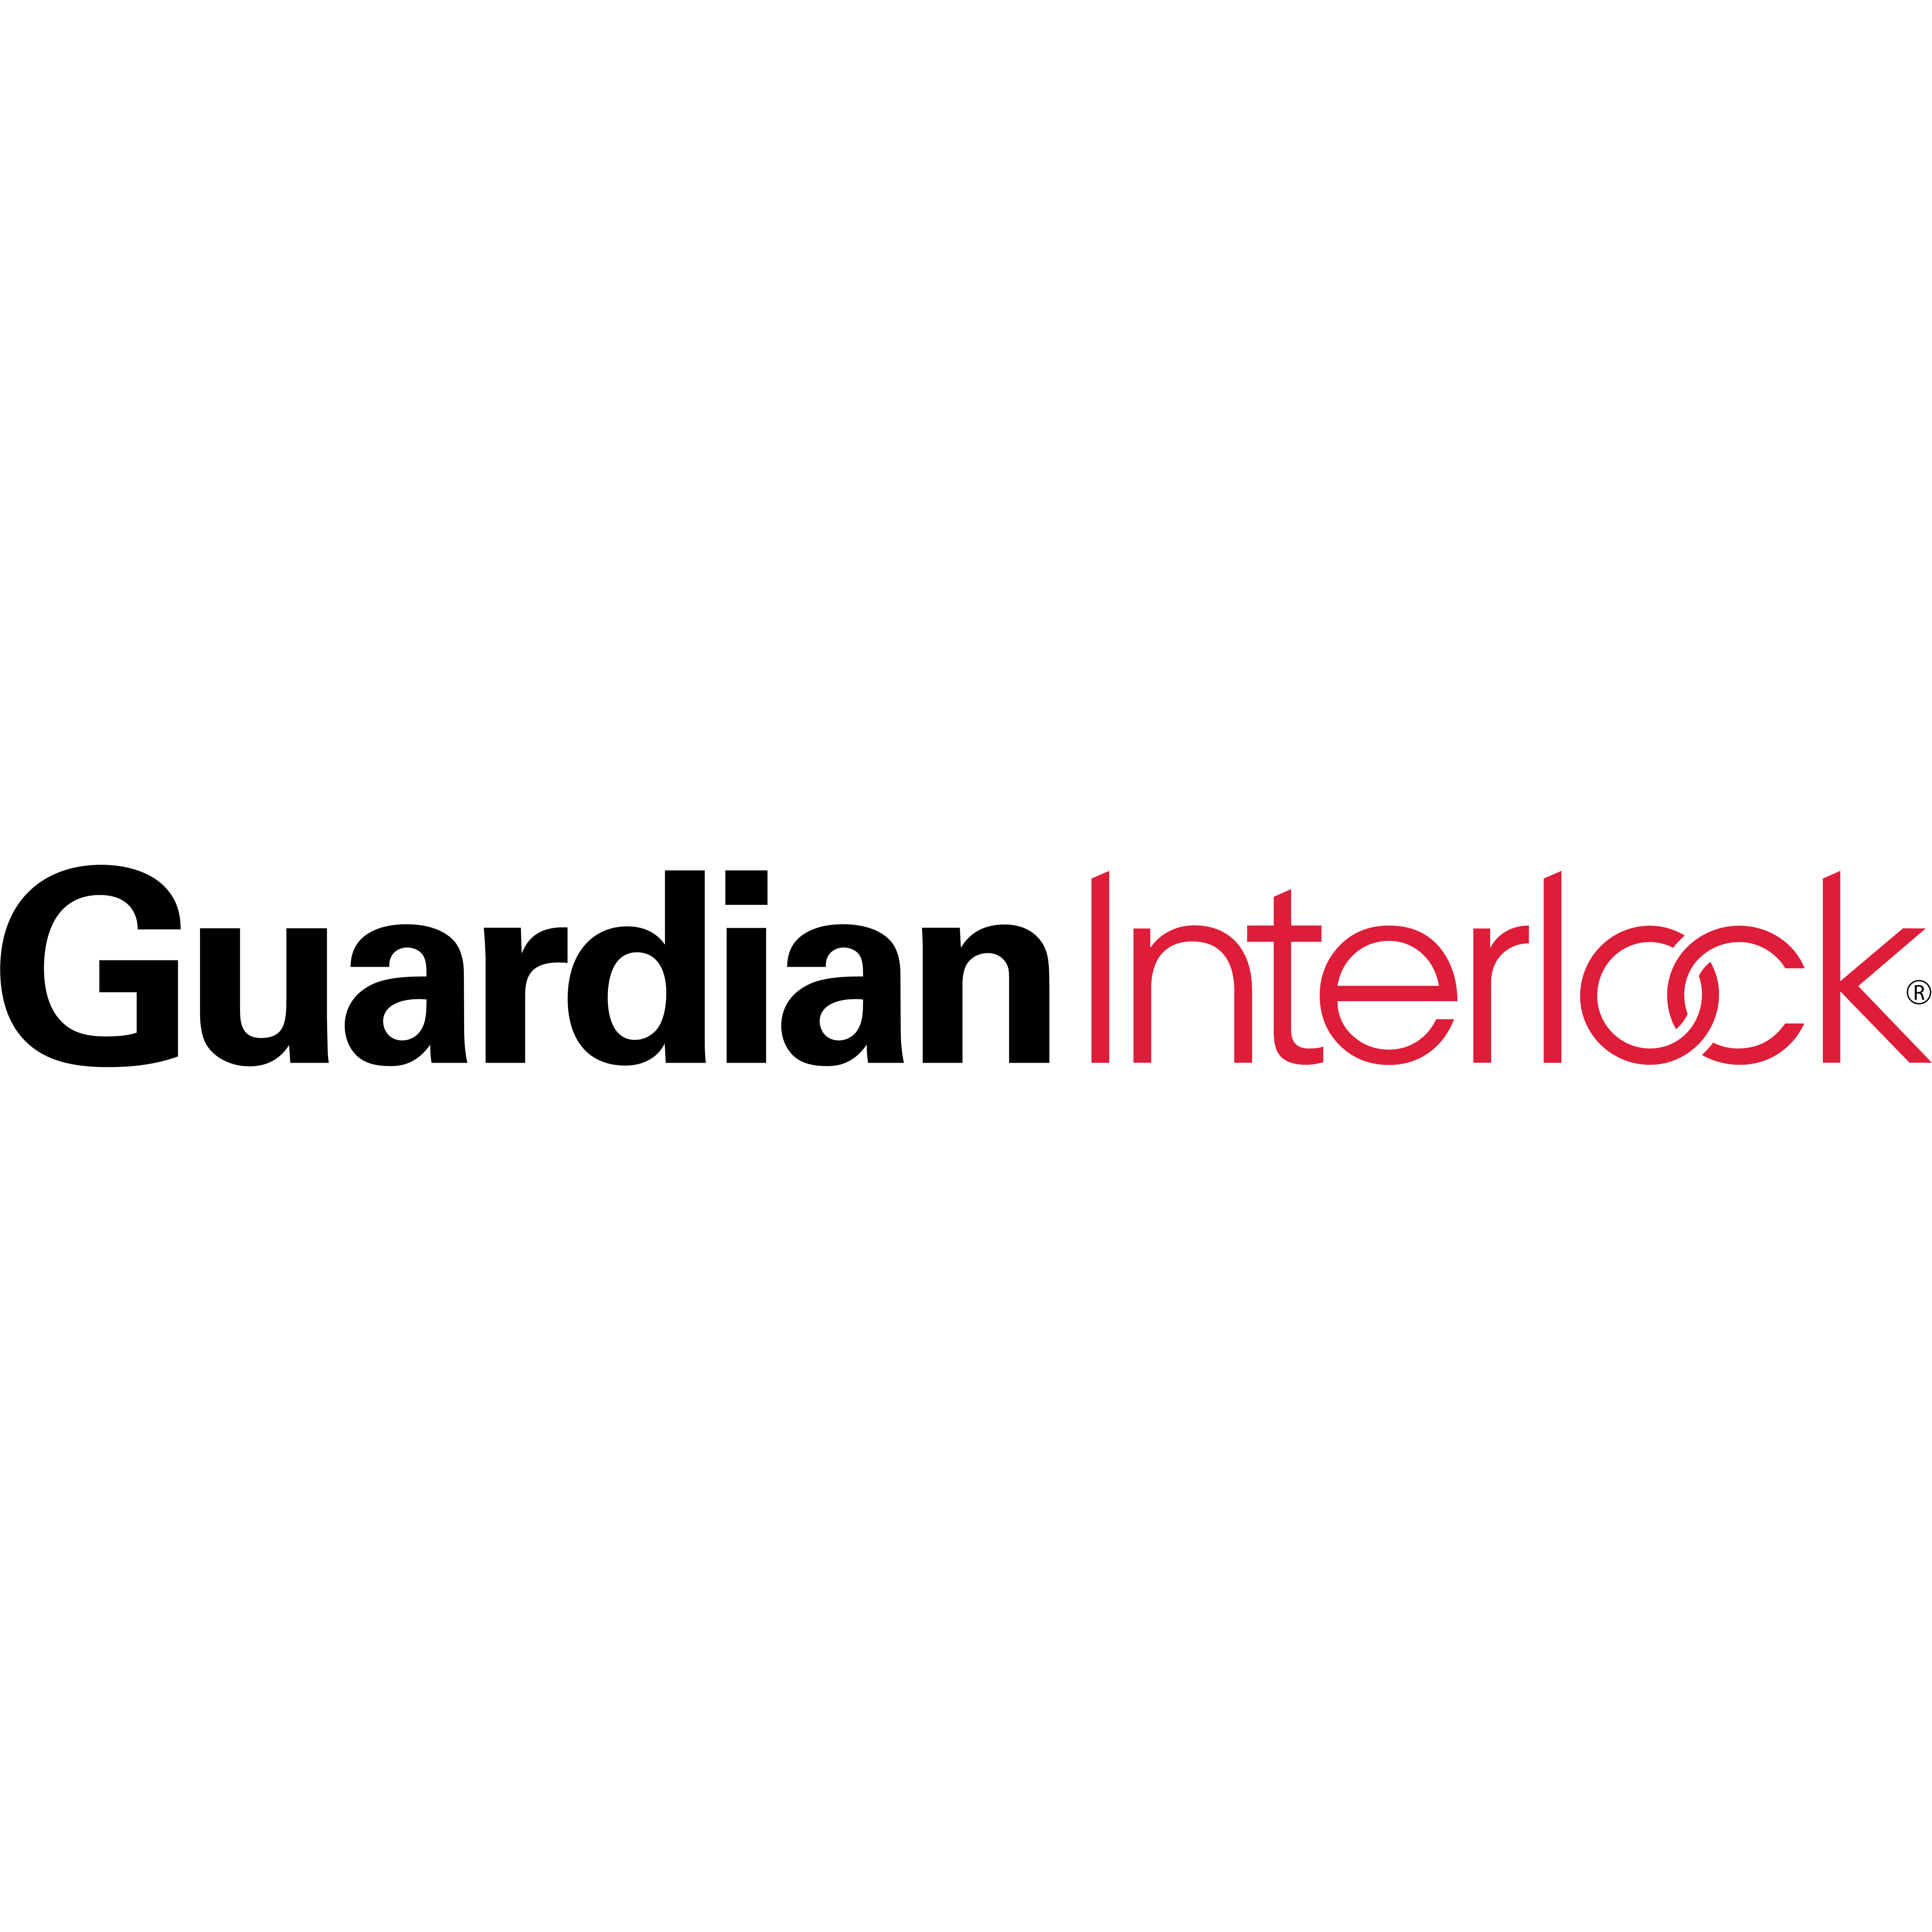 Guardian Interlock - Florence, KY 41042 - (270)807-8062 | ShowMeLocal.com